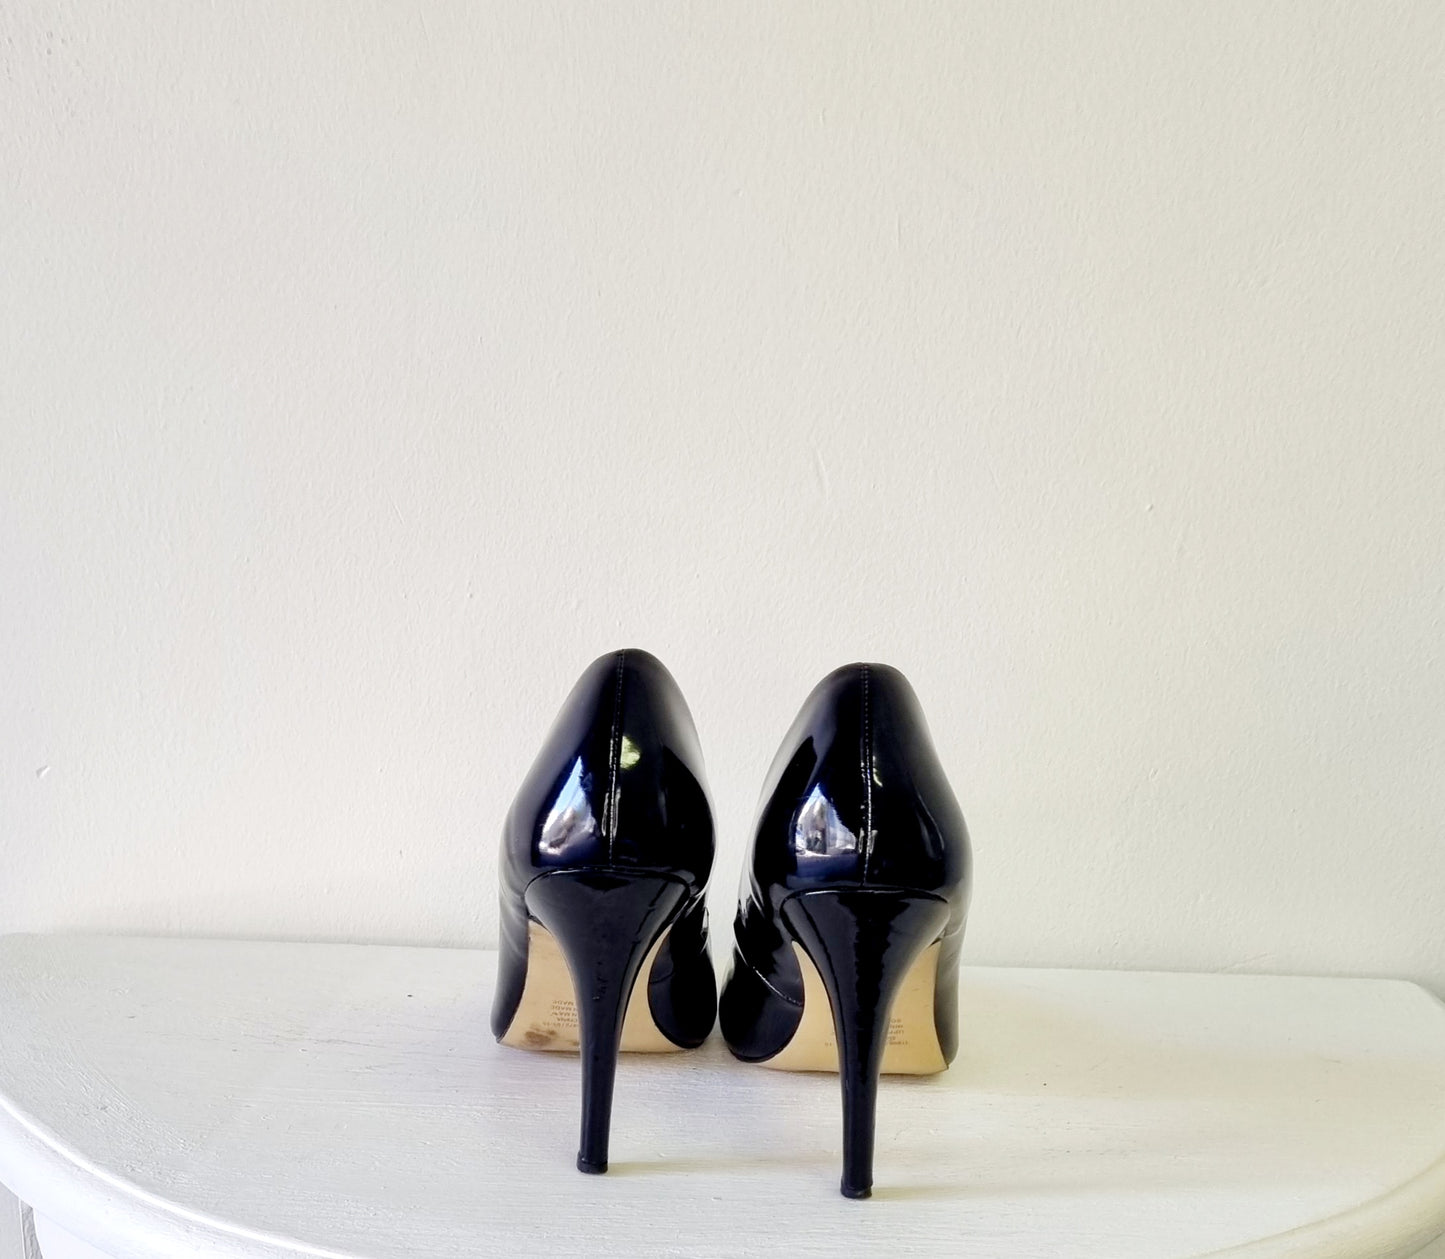 Woolworths - Black patent court heels